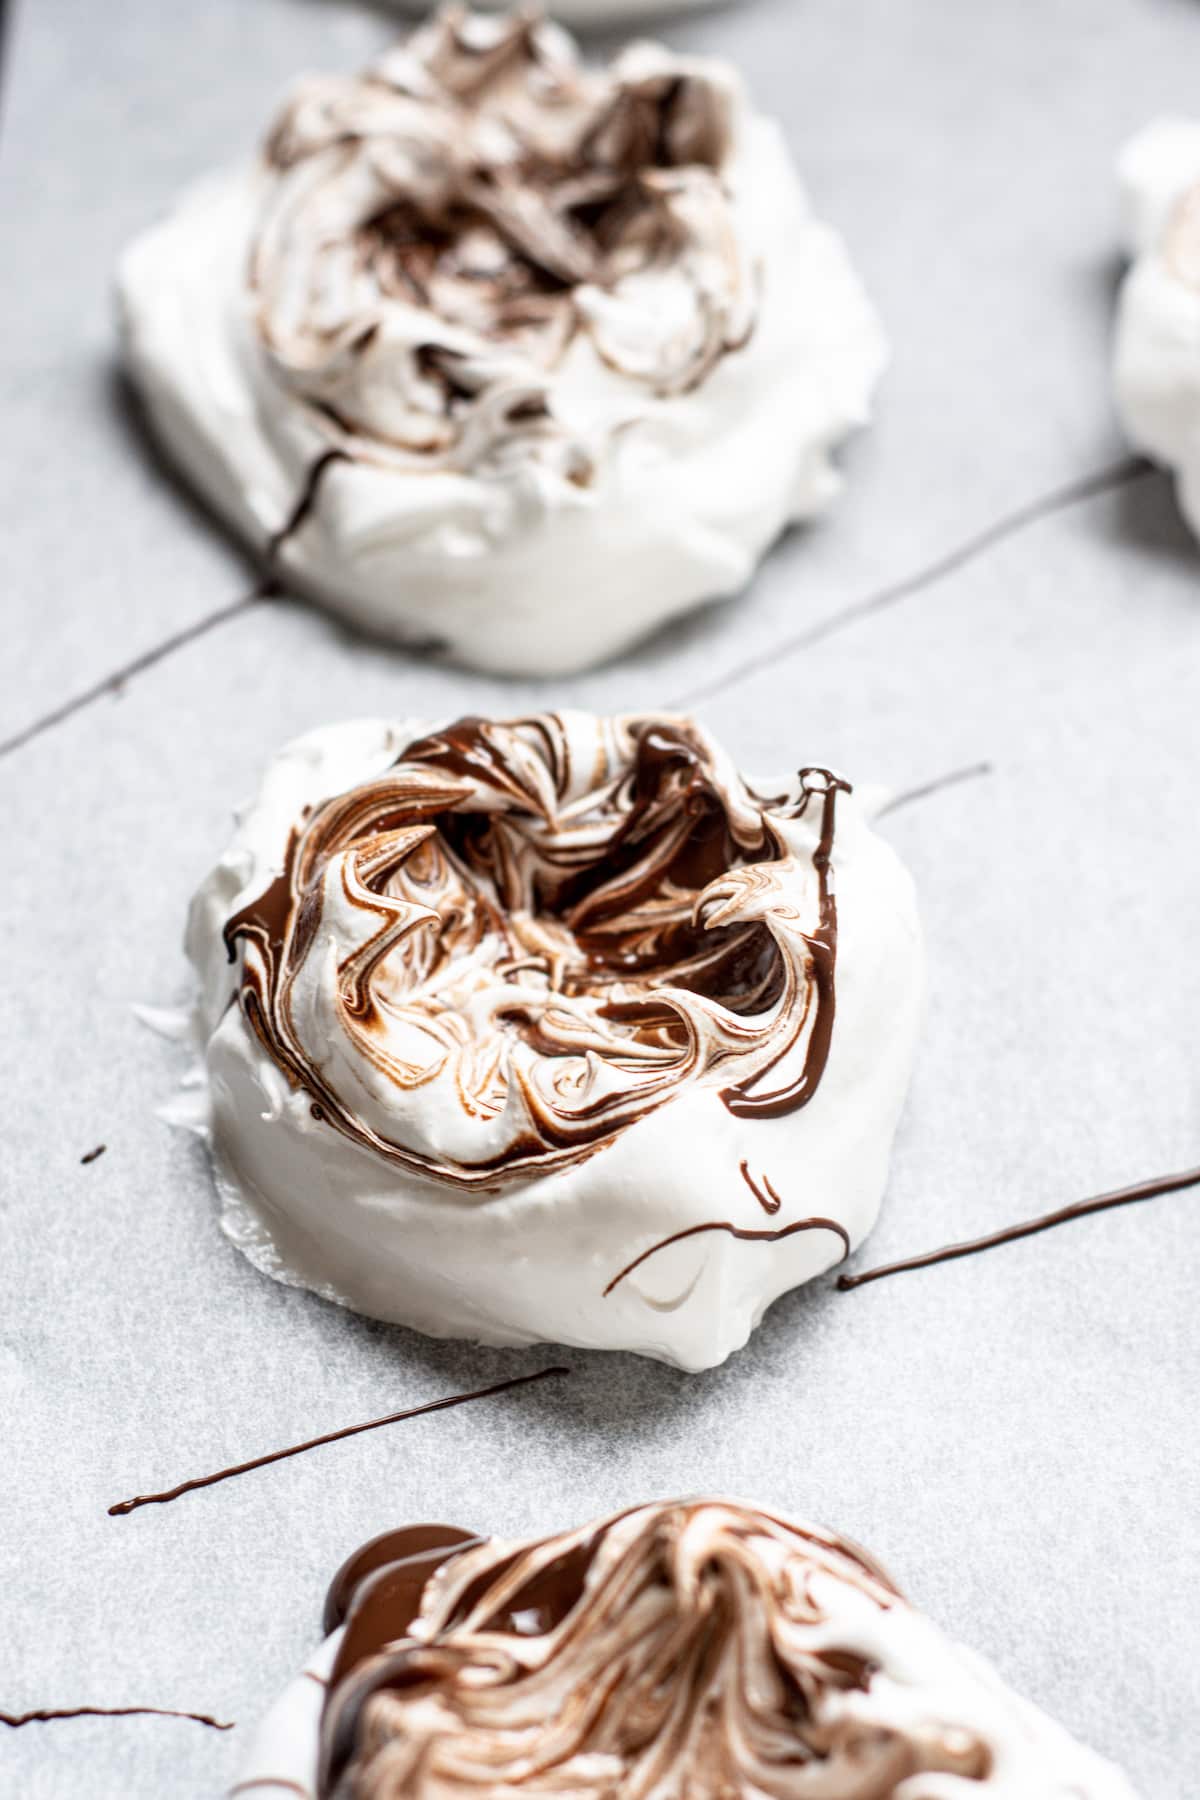 chocolate swirled meringues.